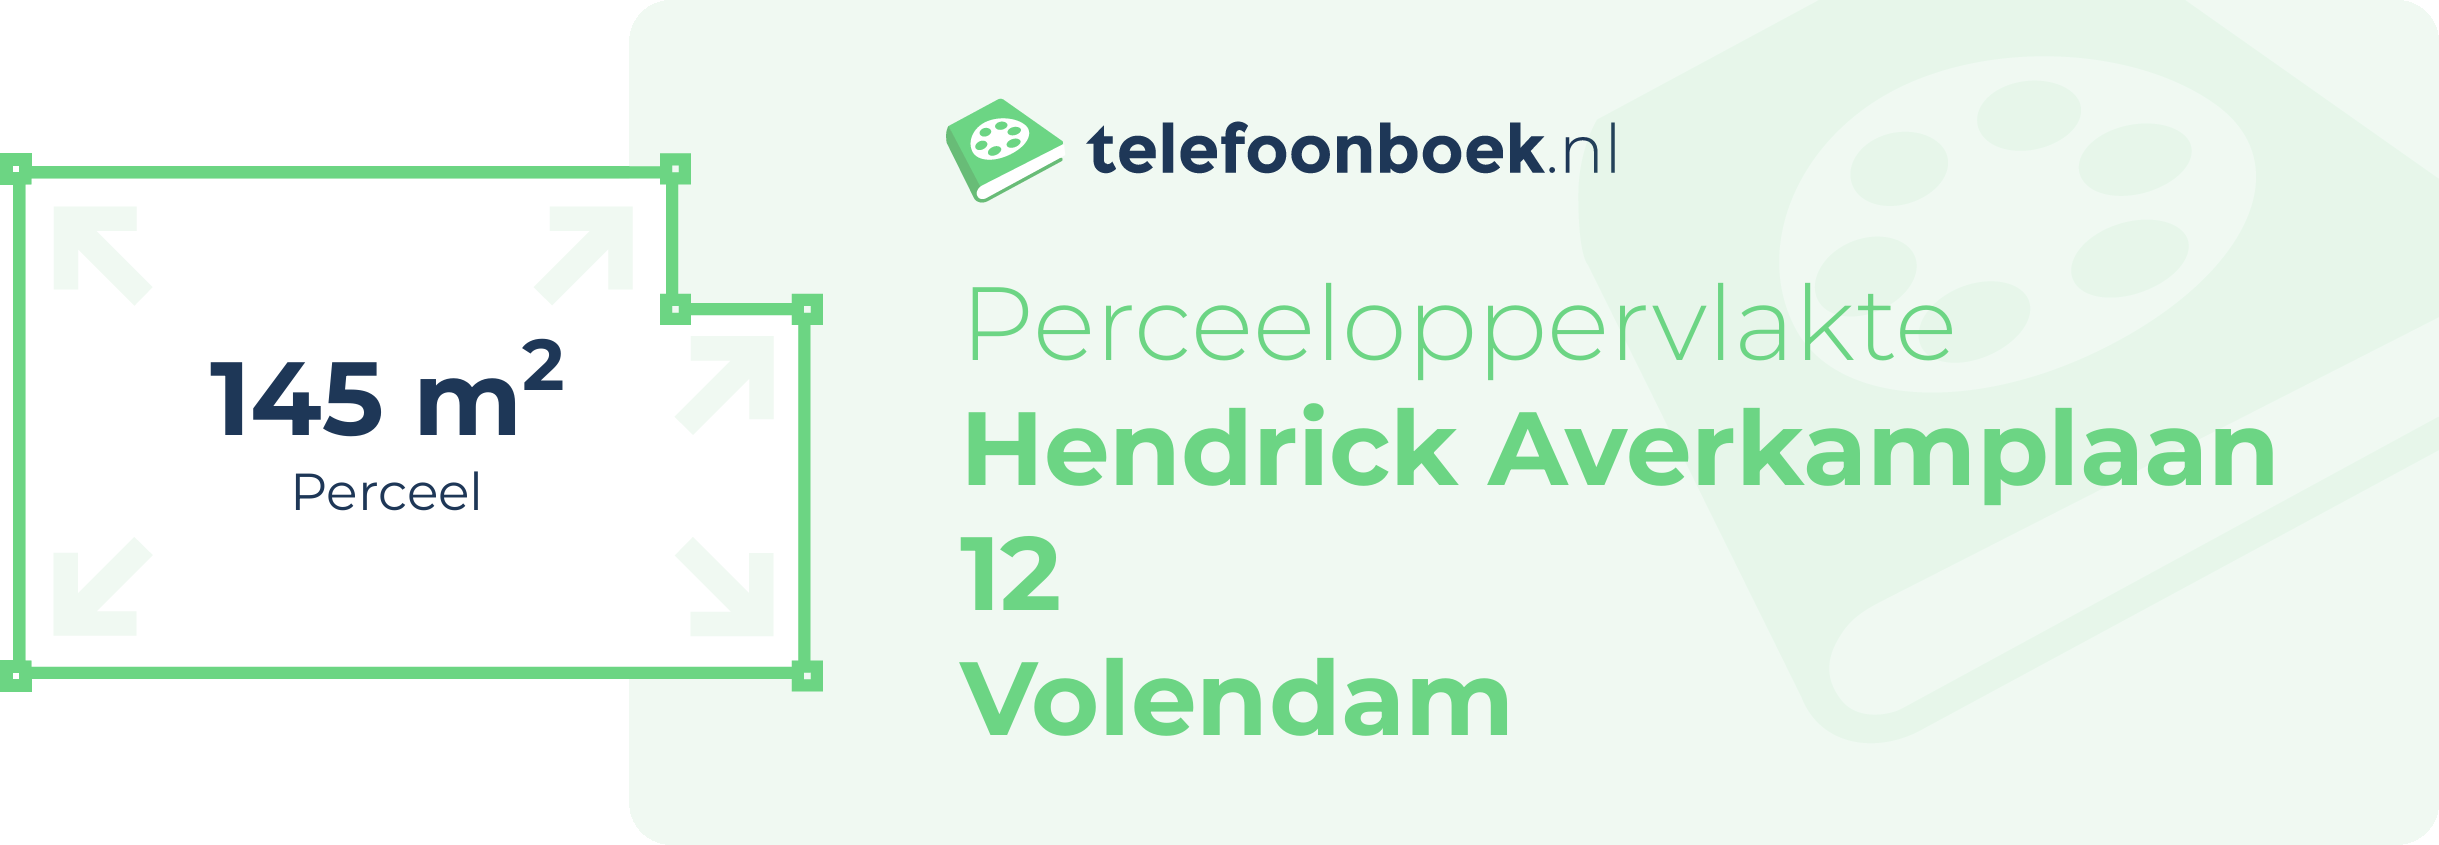 Perceeloppervlakte Hendrick Averkamplaan 12 Volendam